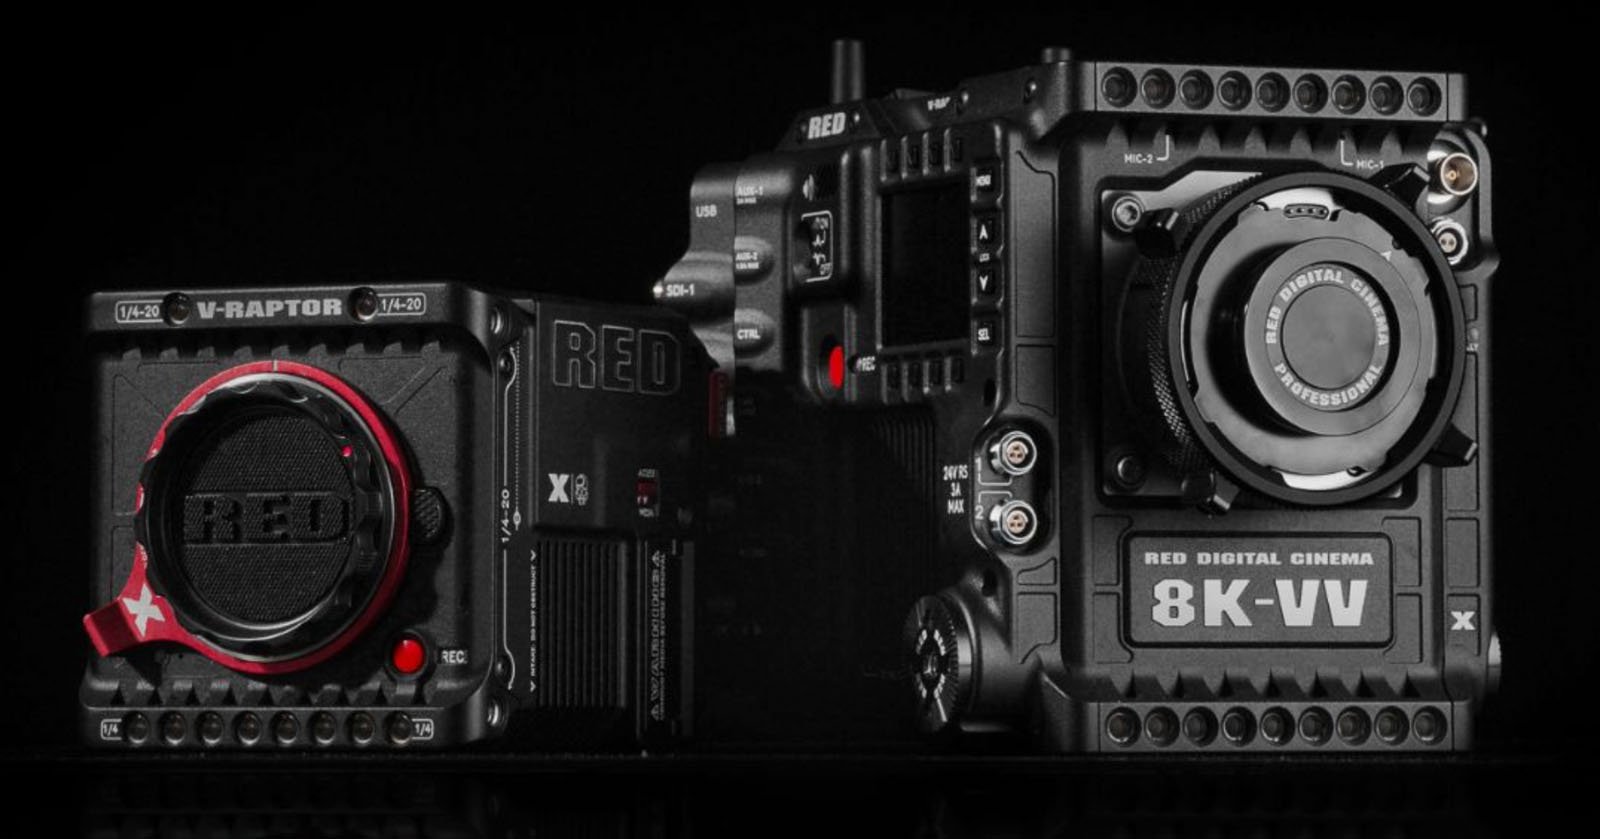 REDs New Global Shutter Camera Promises Unbelievable Dynamic Range